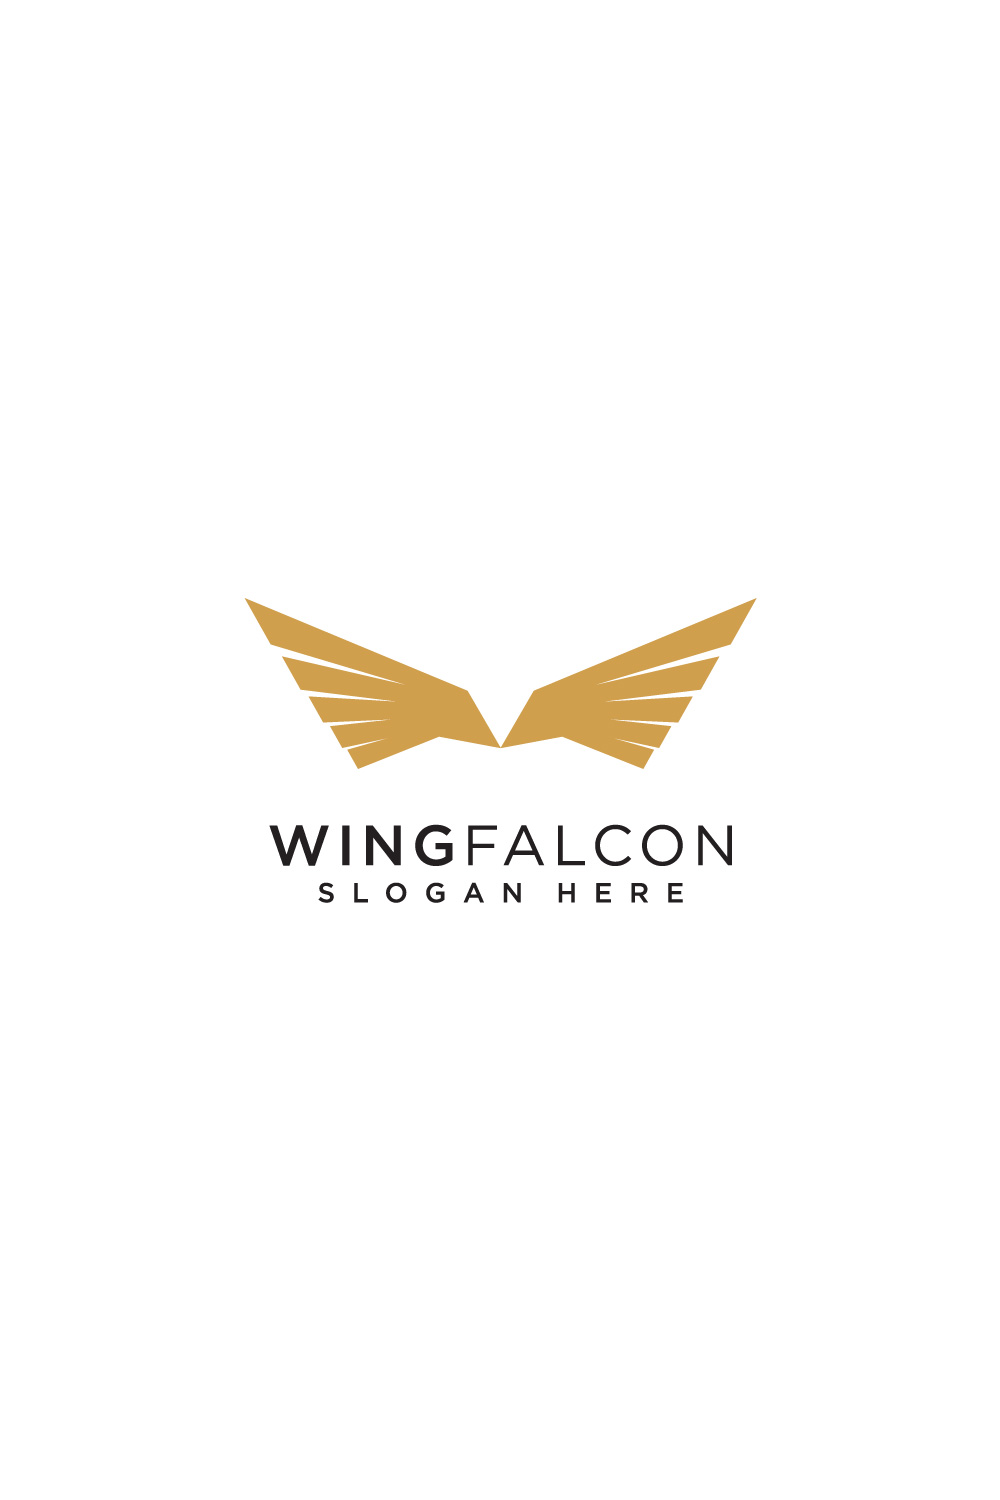 wing eagle logo - MasterBundles